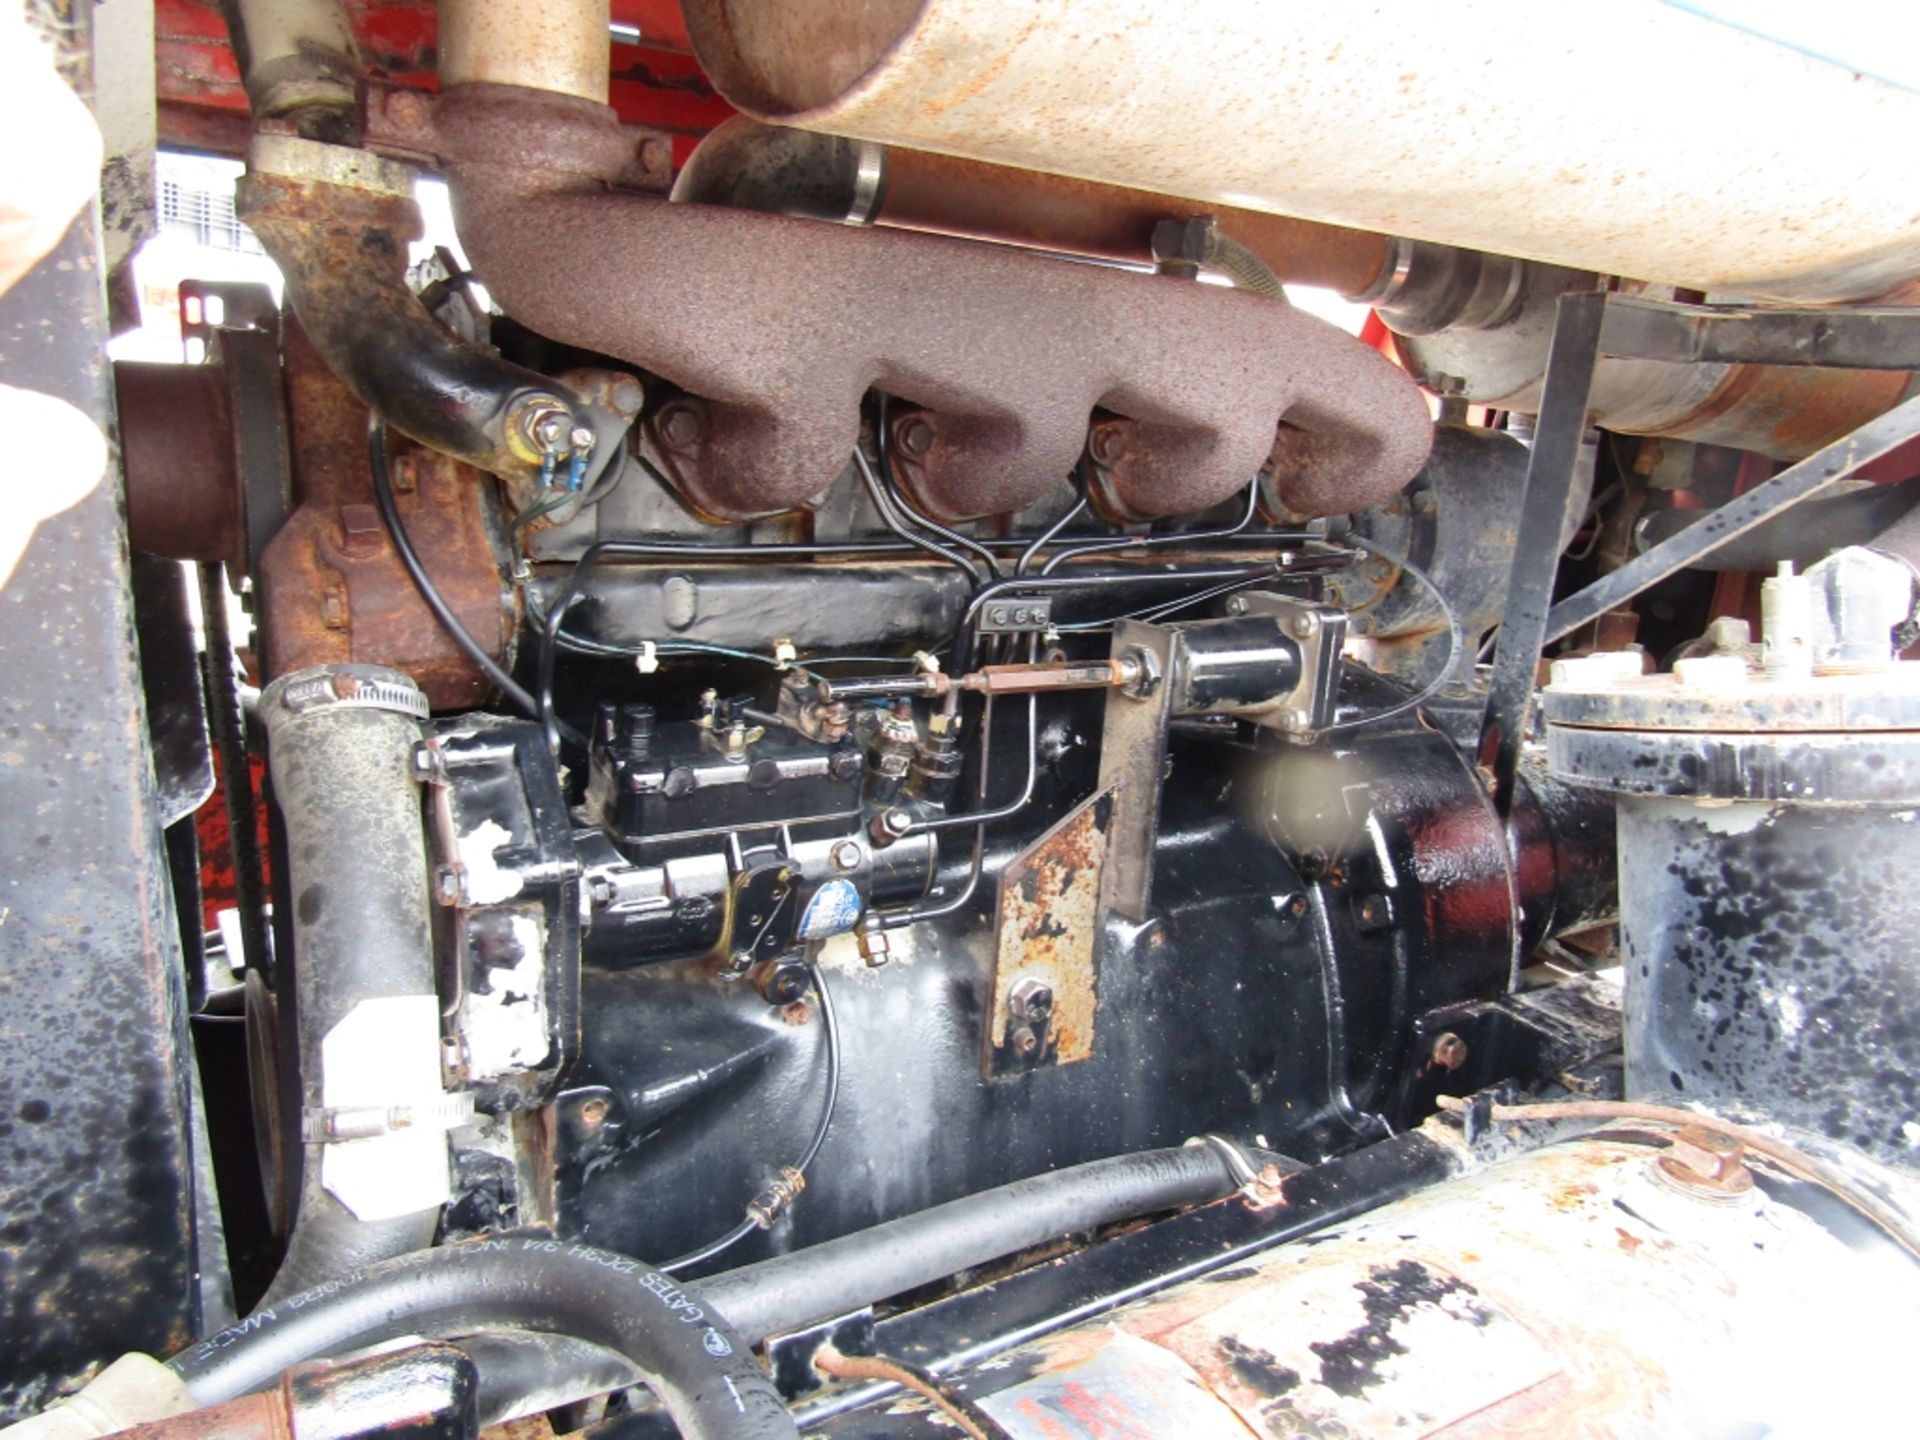 Gordon Smith & Co, Inc. Compressor, 3491 Hours, Serial #200B336, John Deere Saran Engine, # - Image 11 of 14